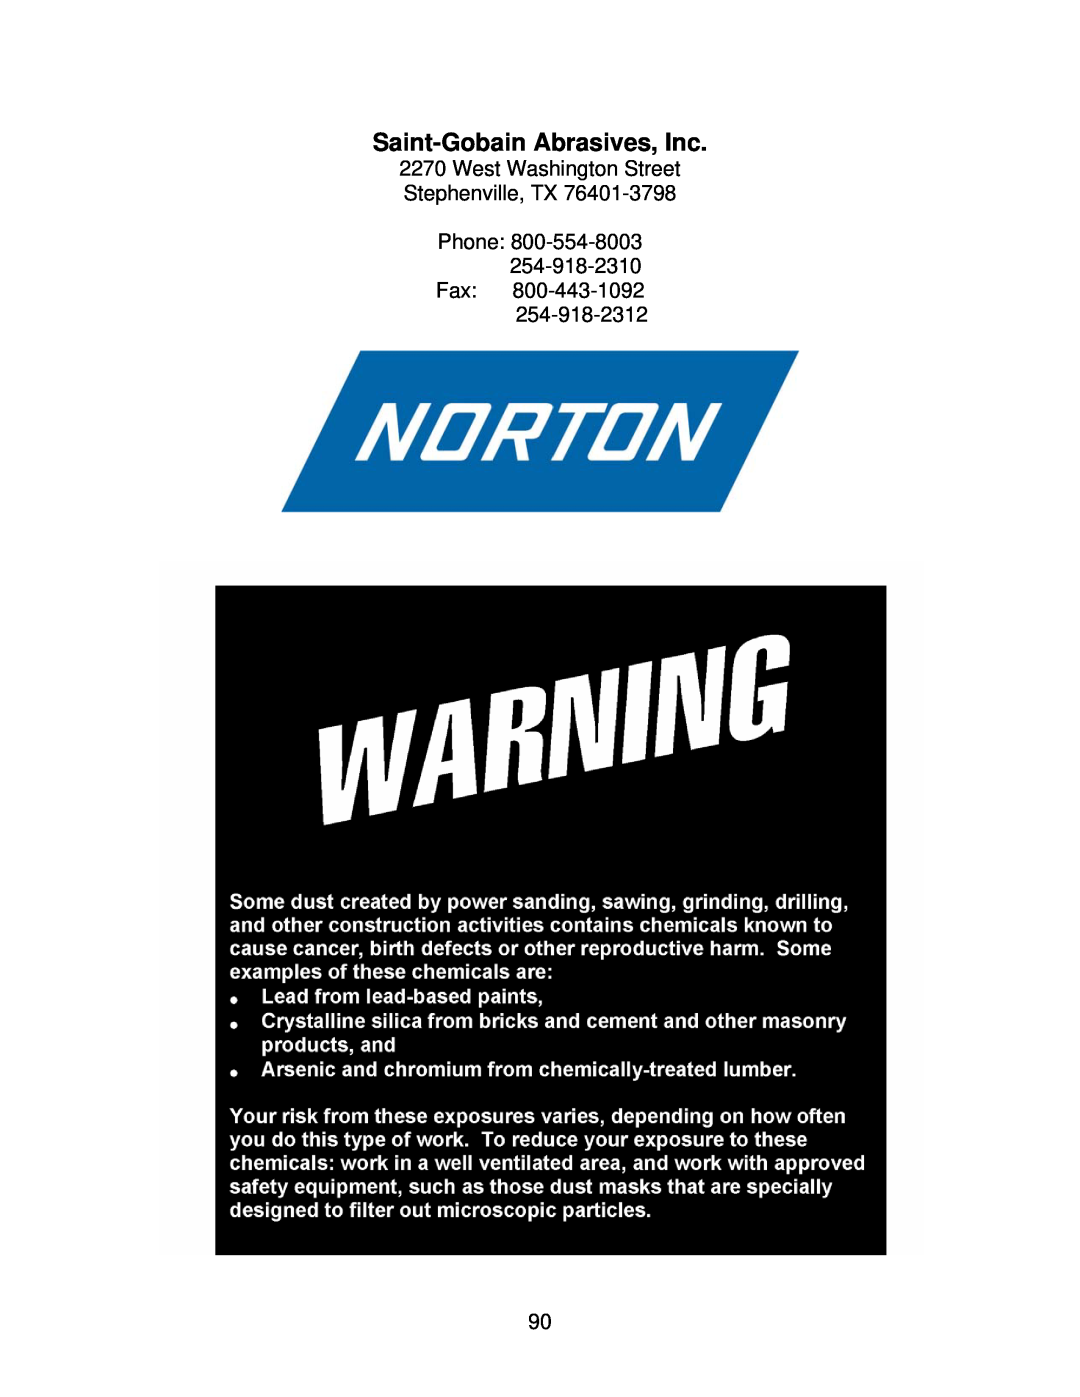 Norton Abrasives C6126, C3120, C6120, C3126, C3130 Saint-Gobain Abrasives, Inc, West Washington Street Stephenville, TX Phone 